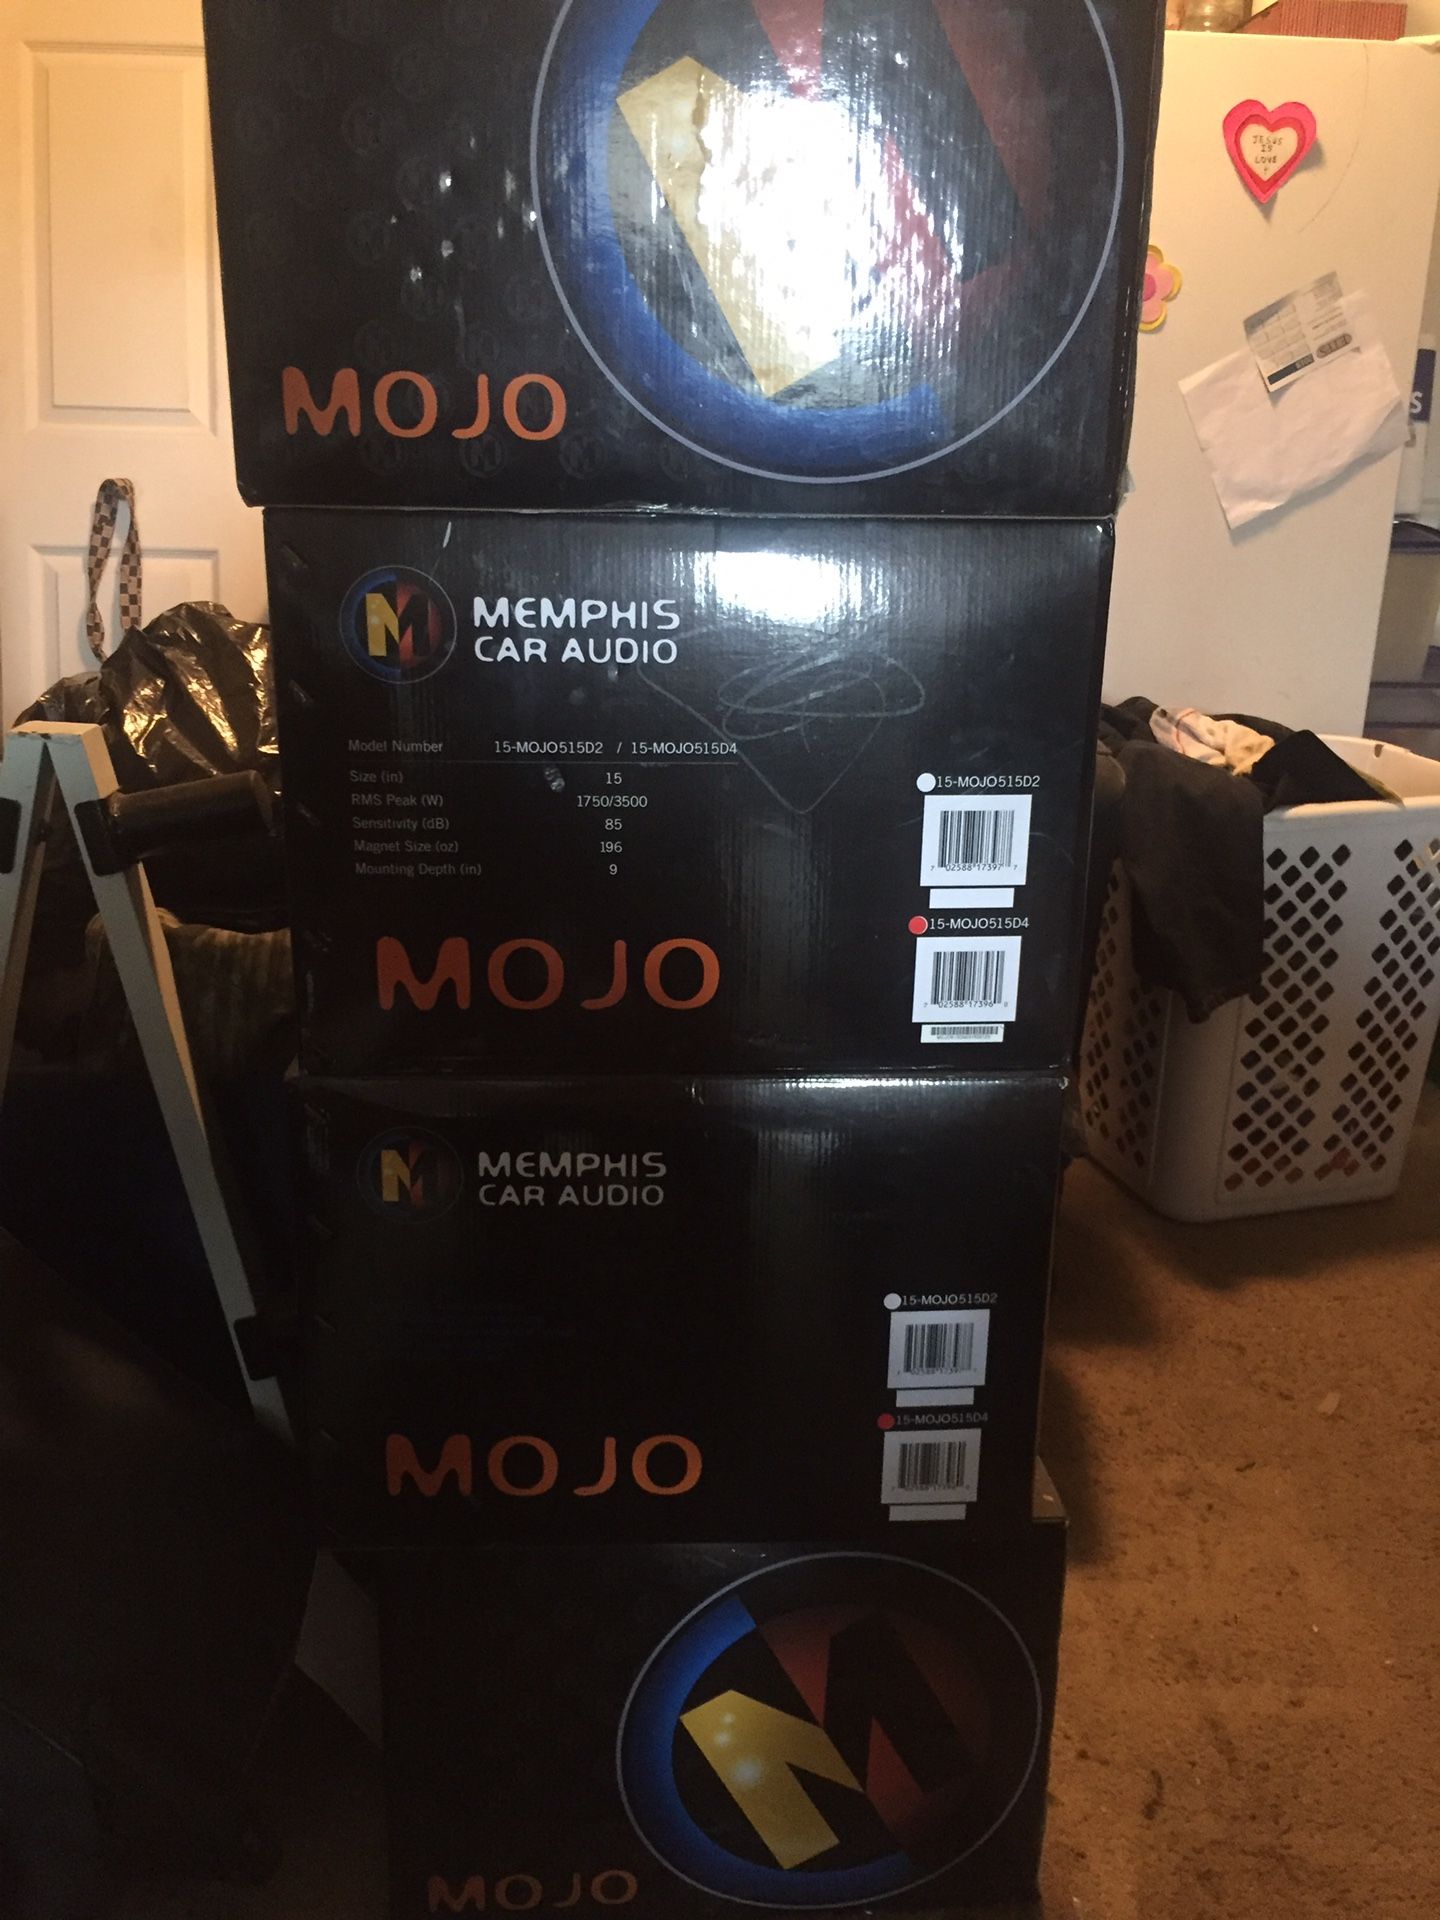 Mojo Memphis audio speakers